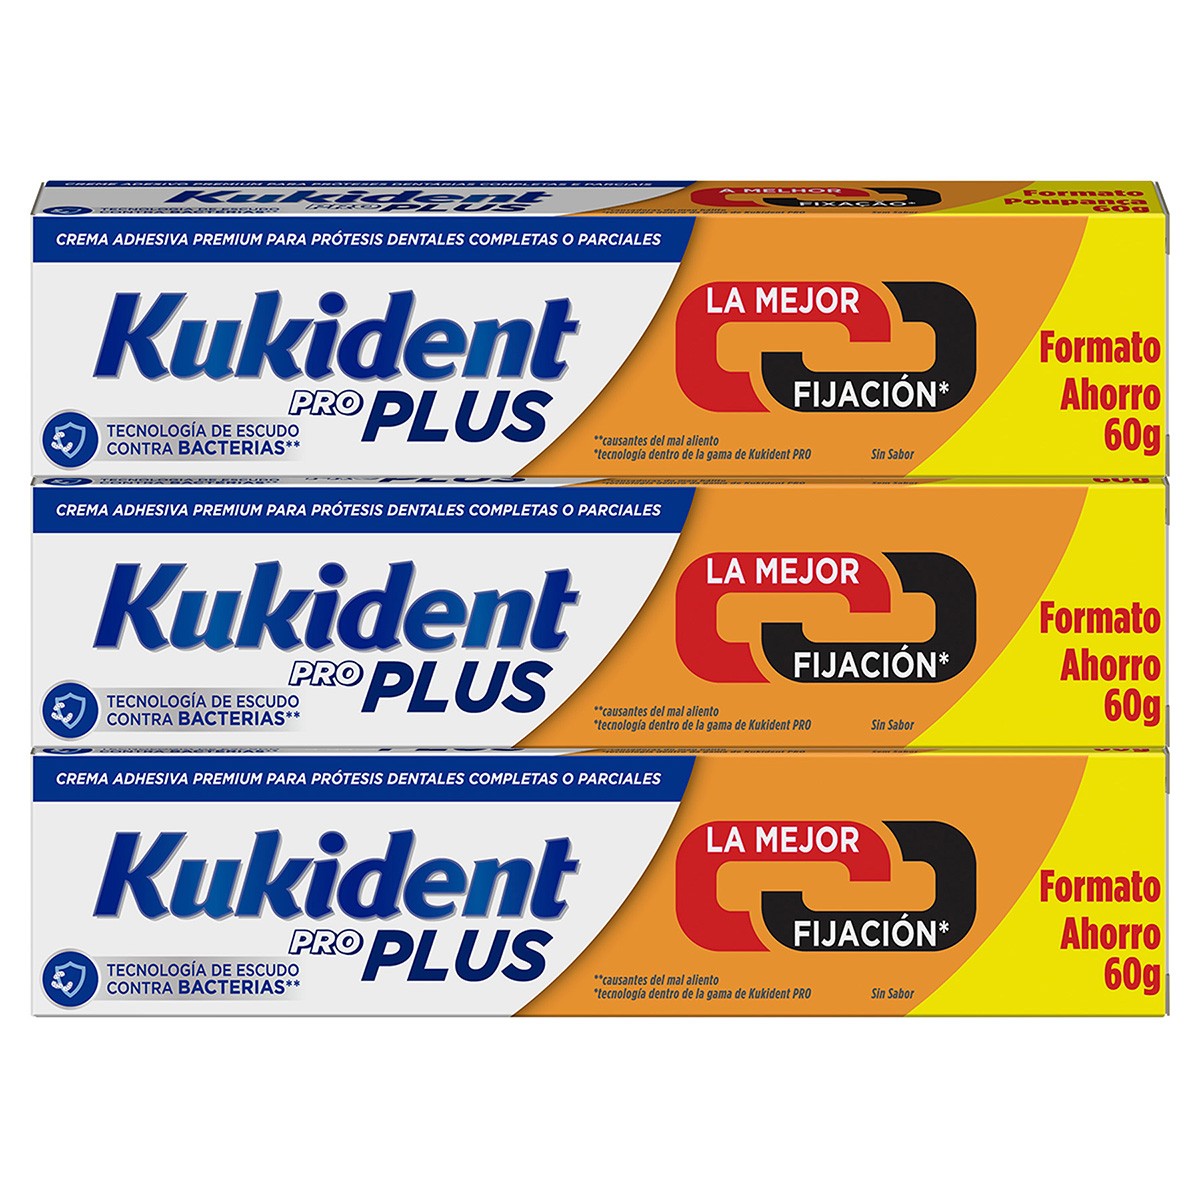 Imagen de Kukident pack Proplus adhesivo para prótesis dentales doble acción 3x60g